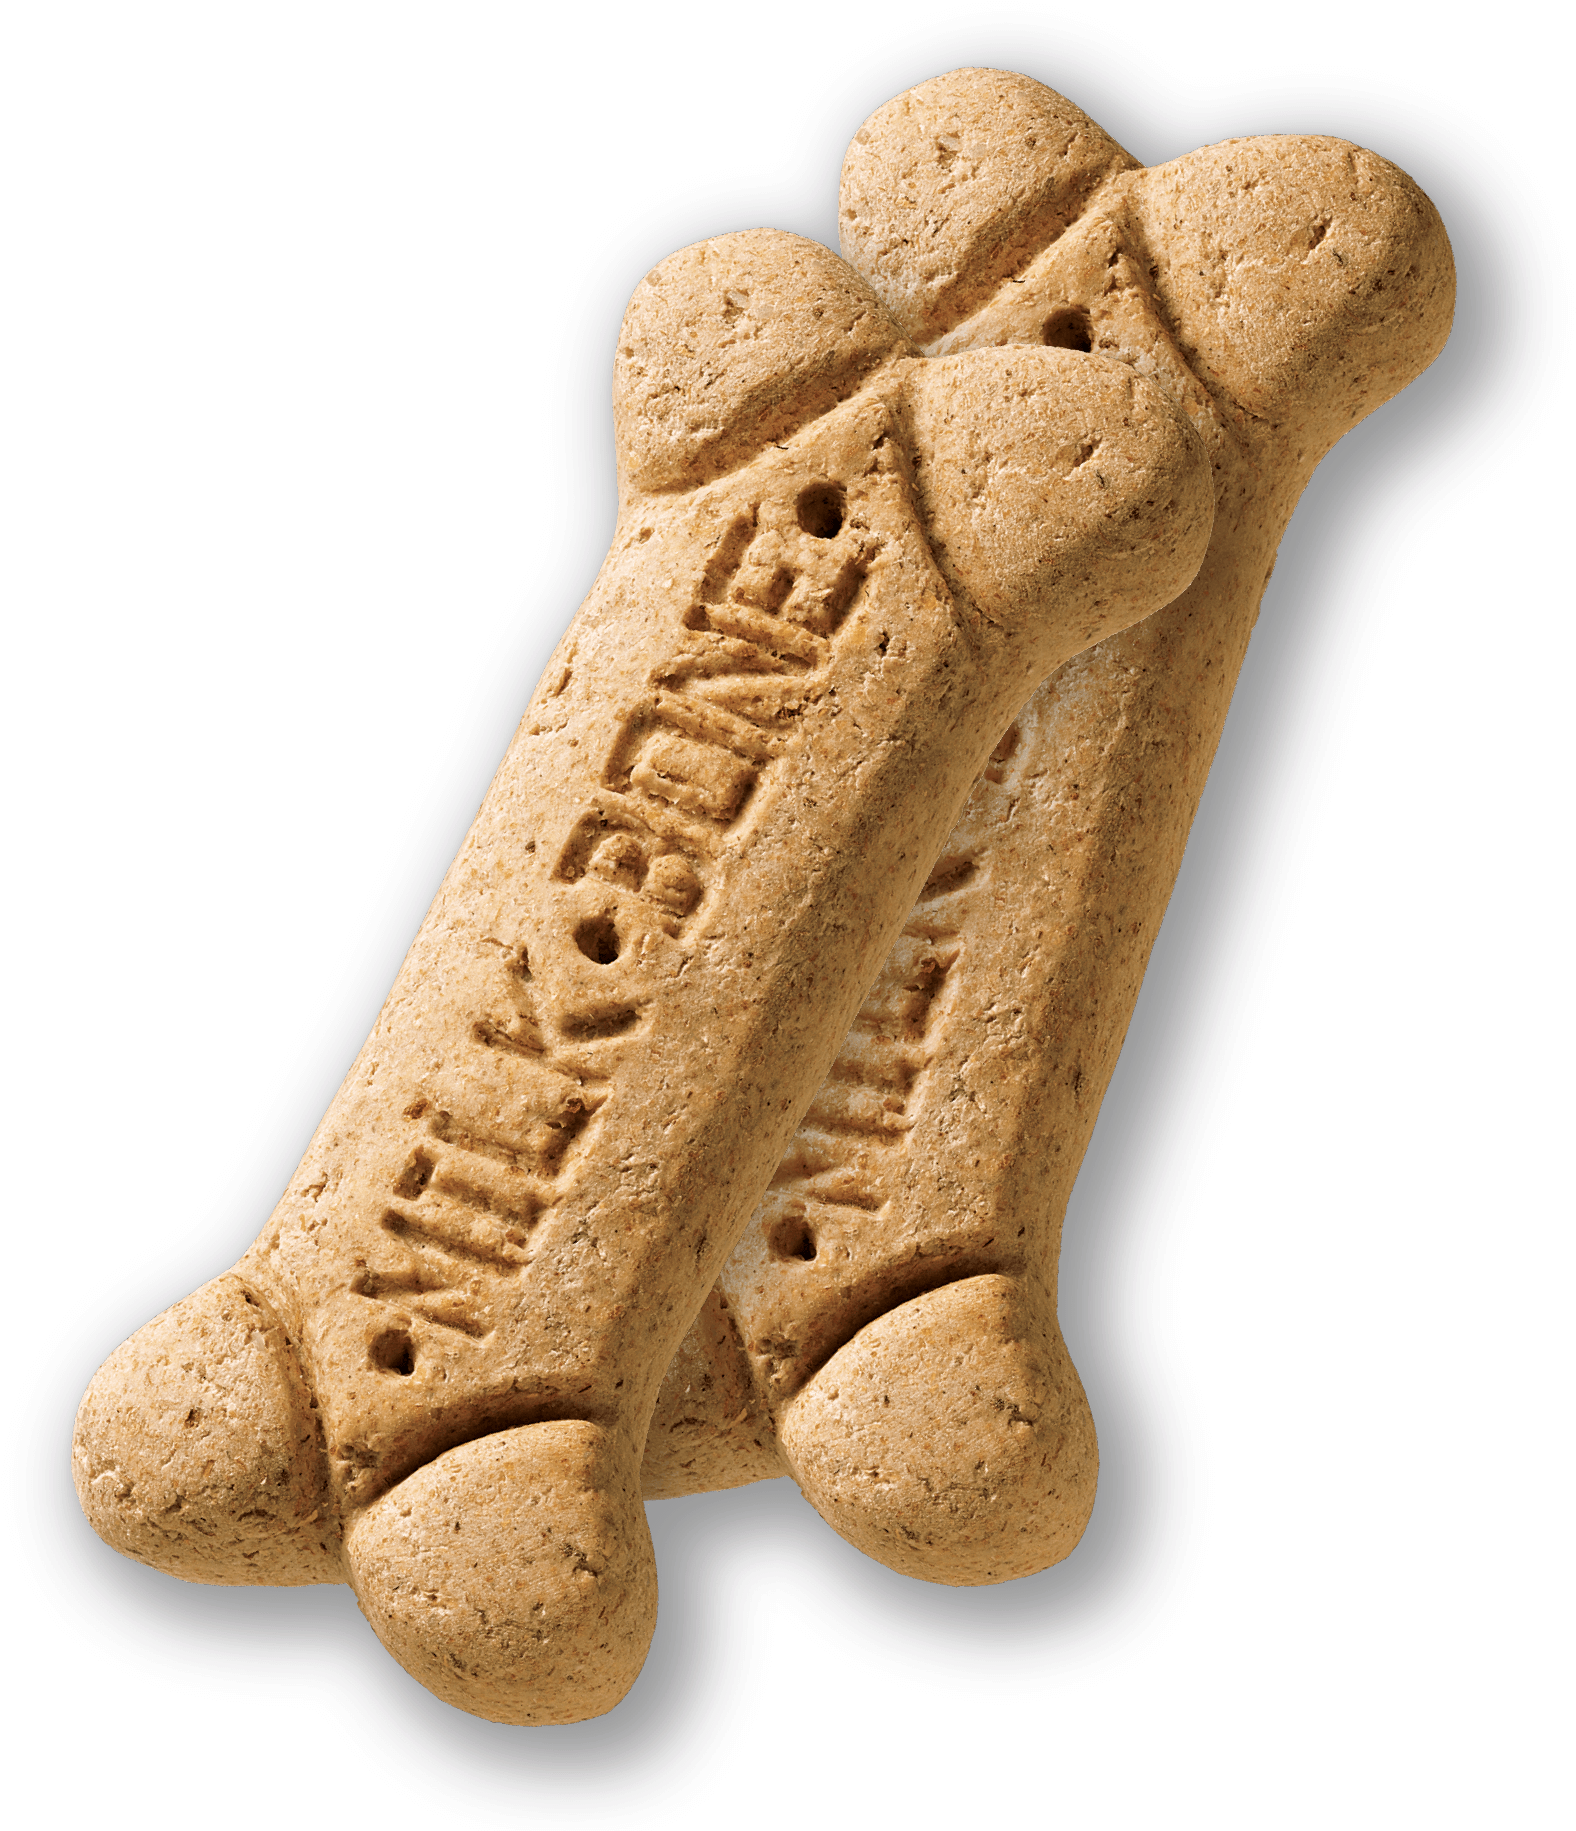 Dog Bone Png Image - Milk Bone Dog Biscuit (1920x1920), Png Download